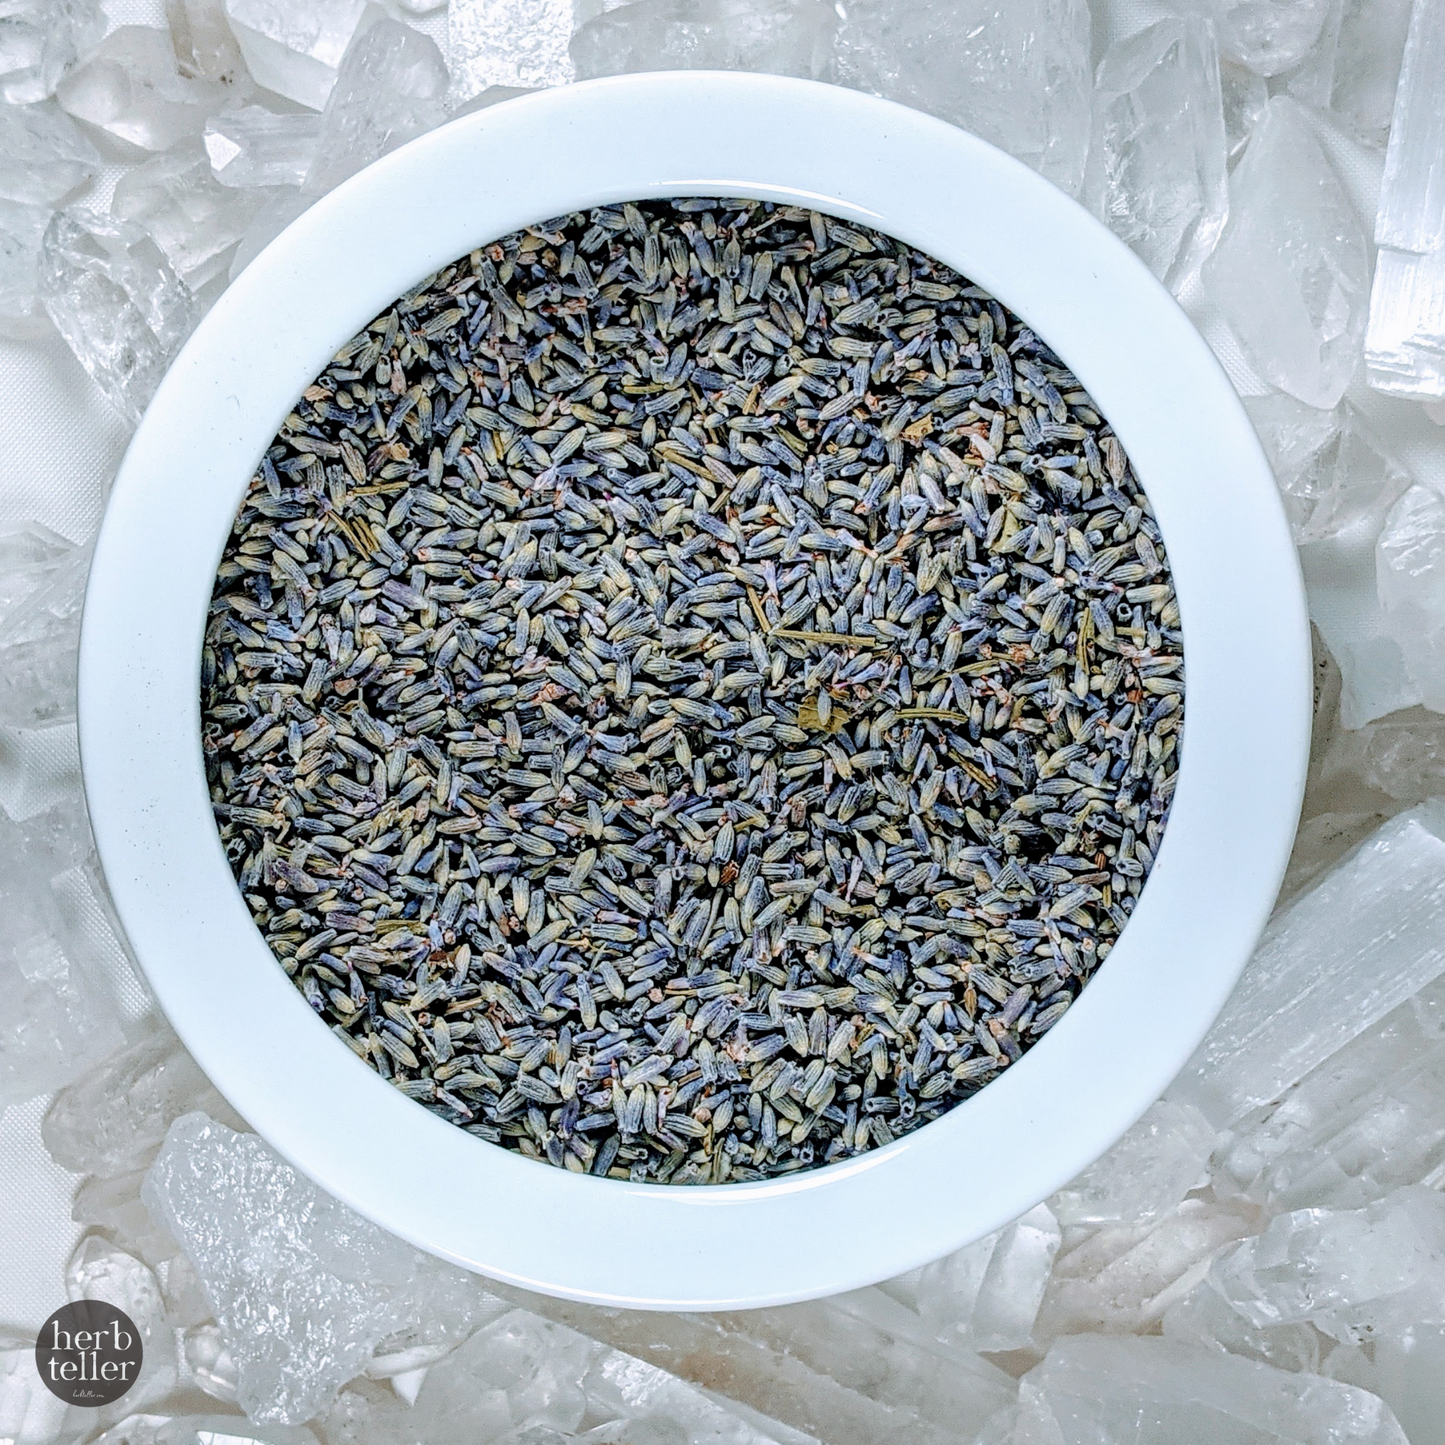 Lavender Organic Herb (Herbtention)